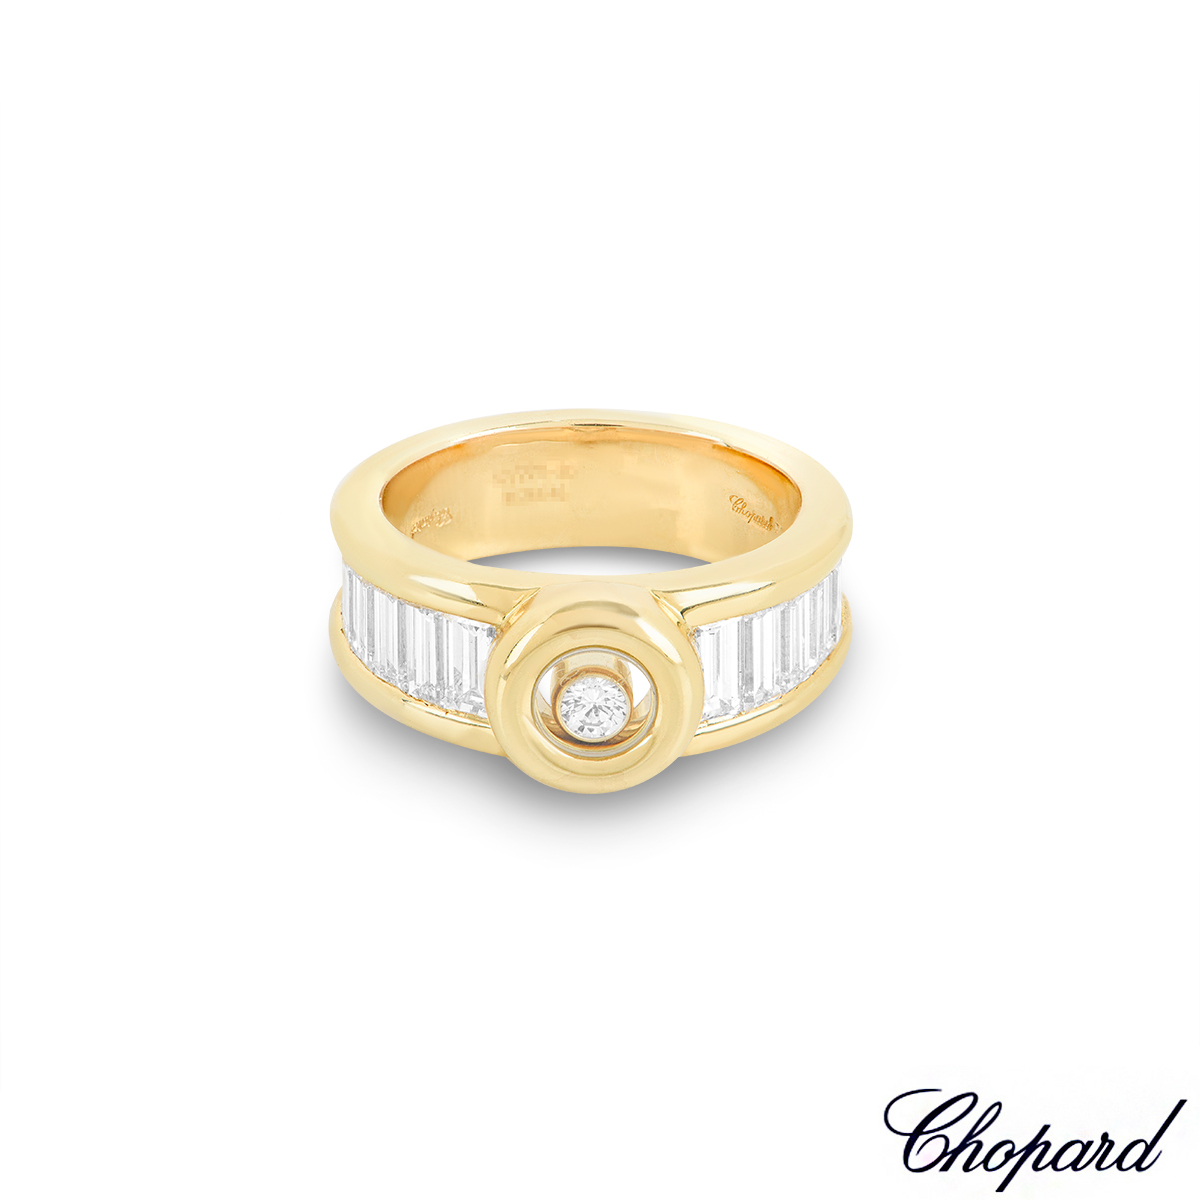 Chopard Yellow Gold Happy Diamonds Ring 82/2211-0107